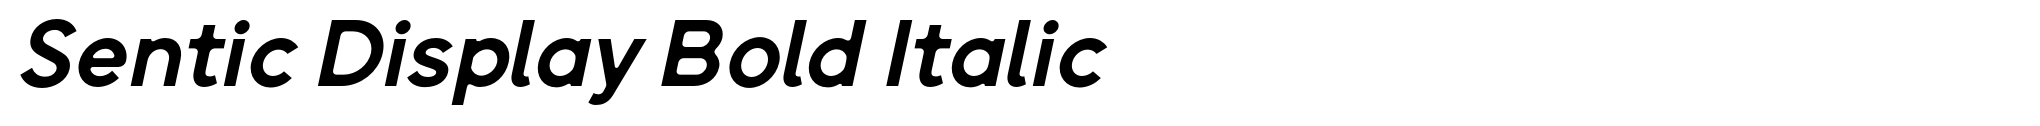 Sentic Display Bold Italic image